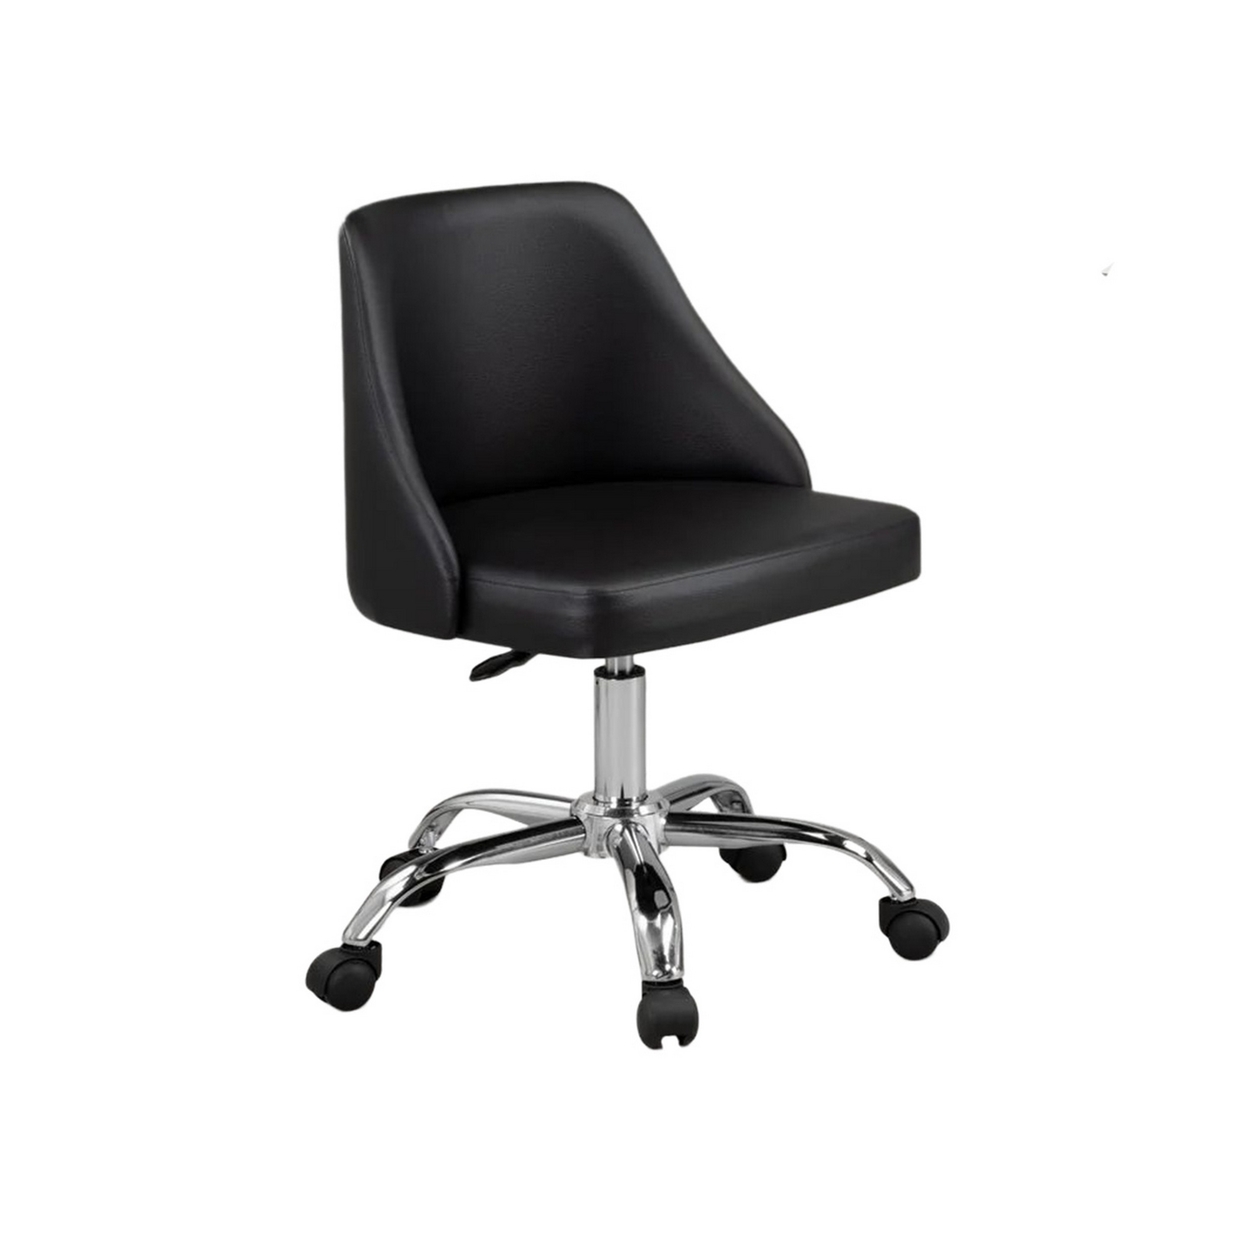 Yim 22 Inch Adjustable Swivel Office Chair, Black Faux Leather, Chrome Base - Saltoro Sherpi